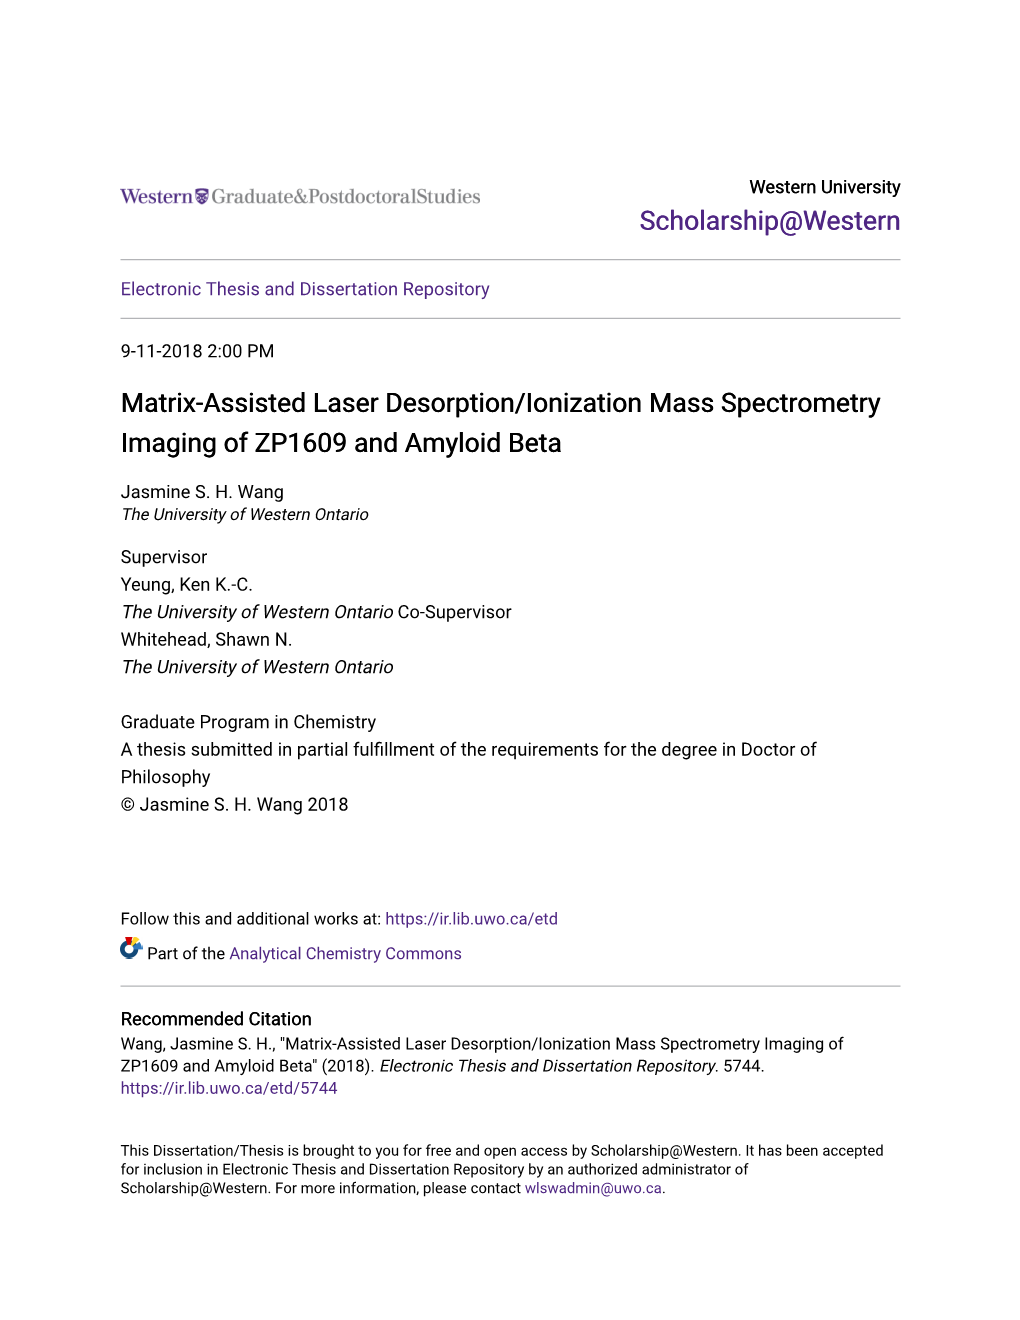 Matrix-Assisted Laser Desorption/Ionization Mass Spectrometry Imaging of ZP1609 and Amyloid Beta